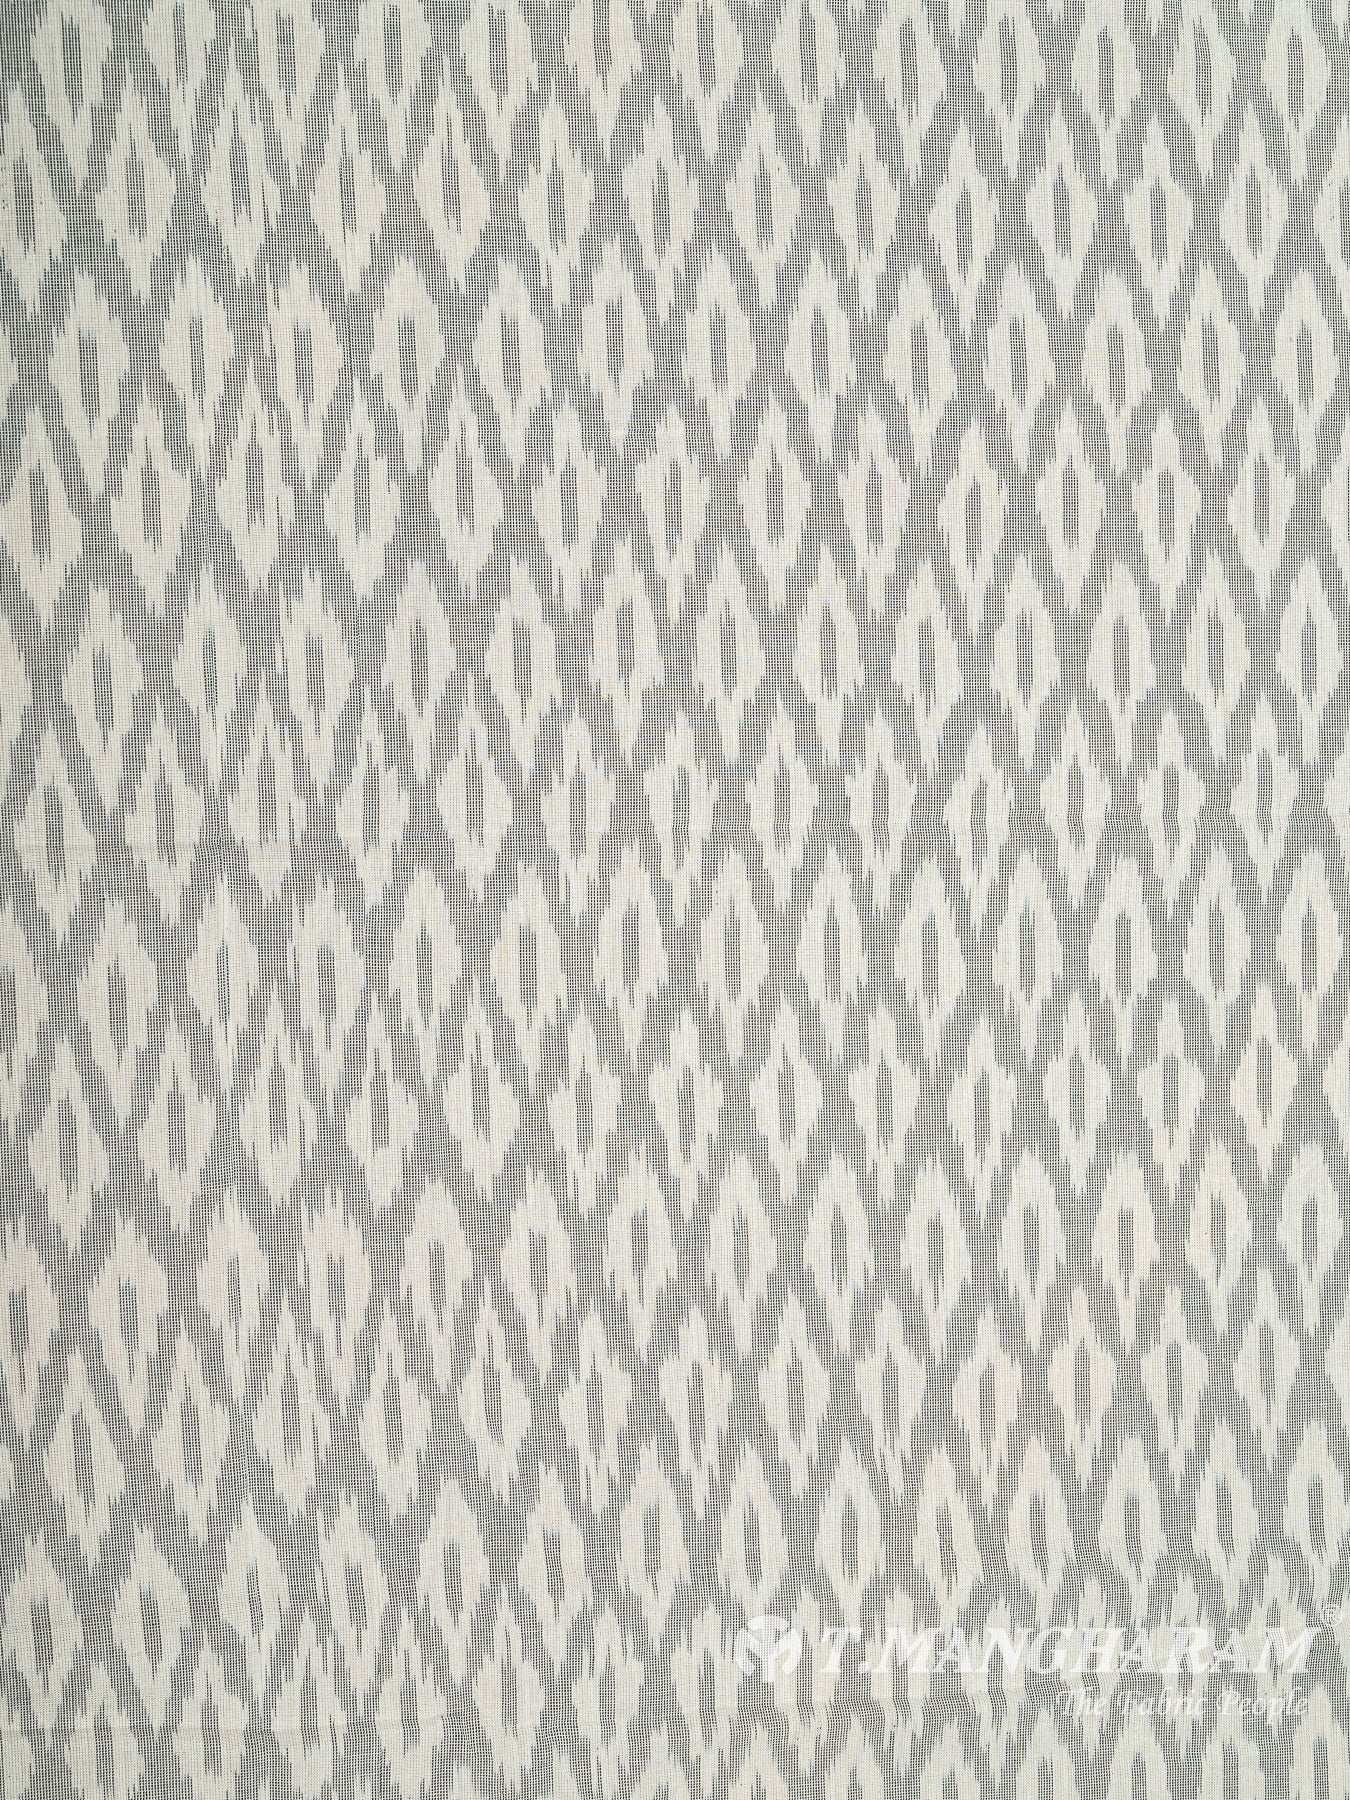 Off White Cotton Ikat Print Fabric - EB5813 view-3